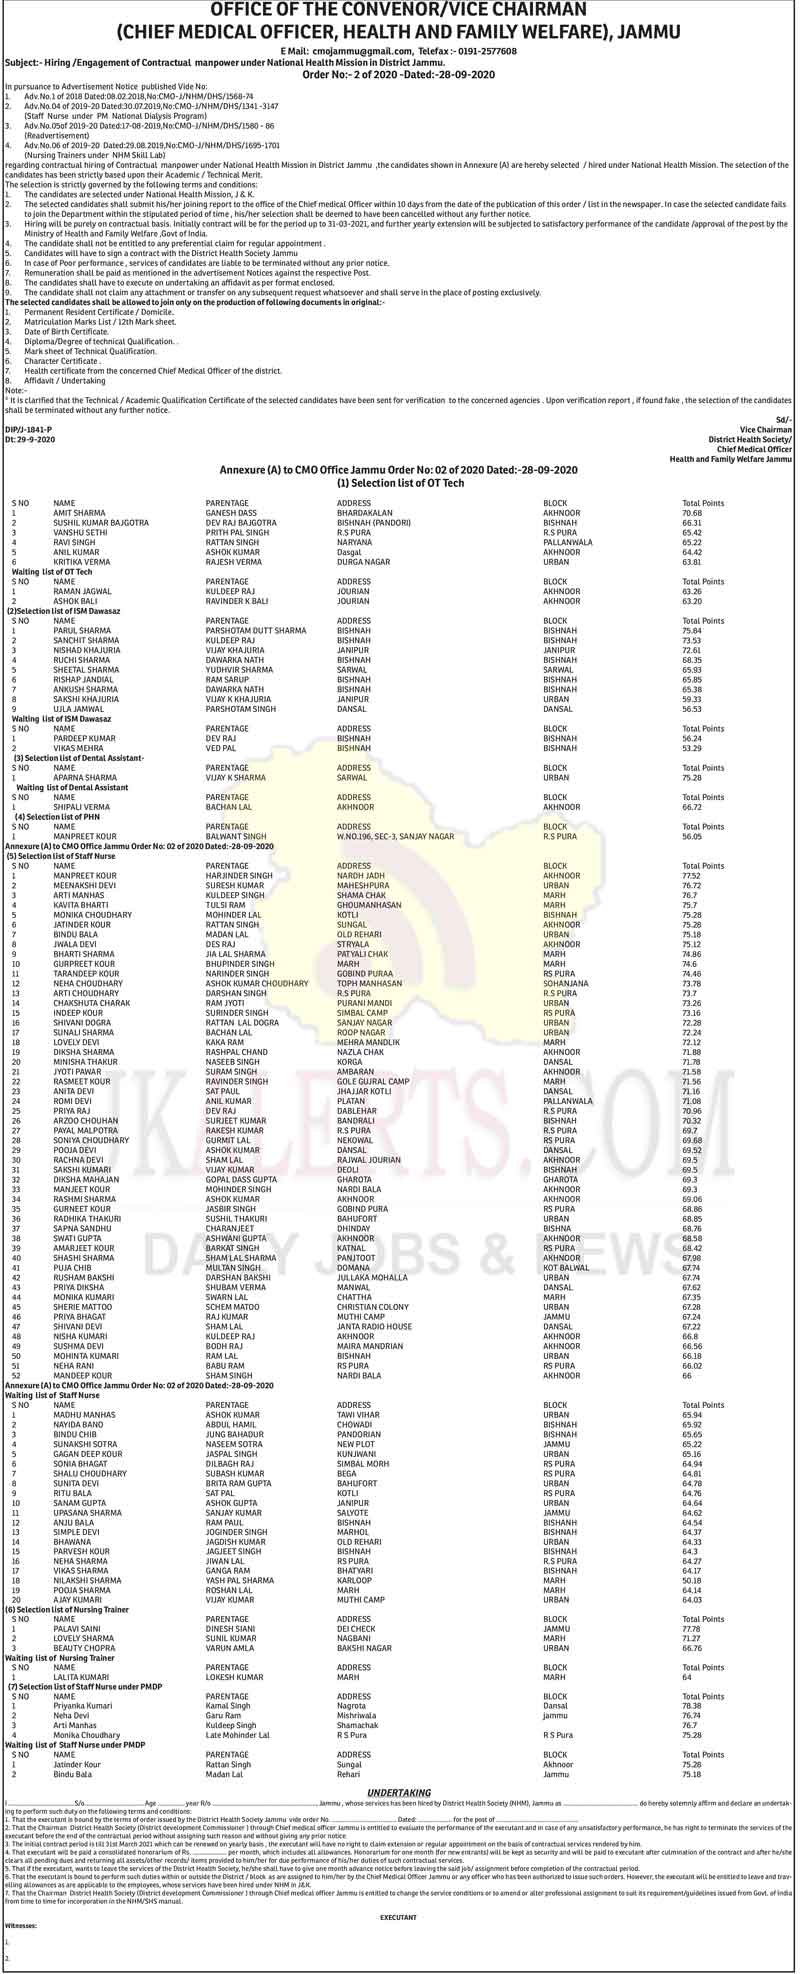 NHM Jammu Selection list of various posts